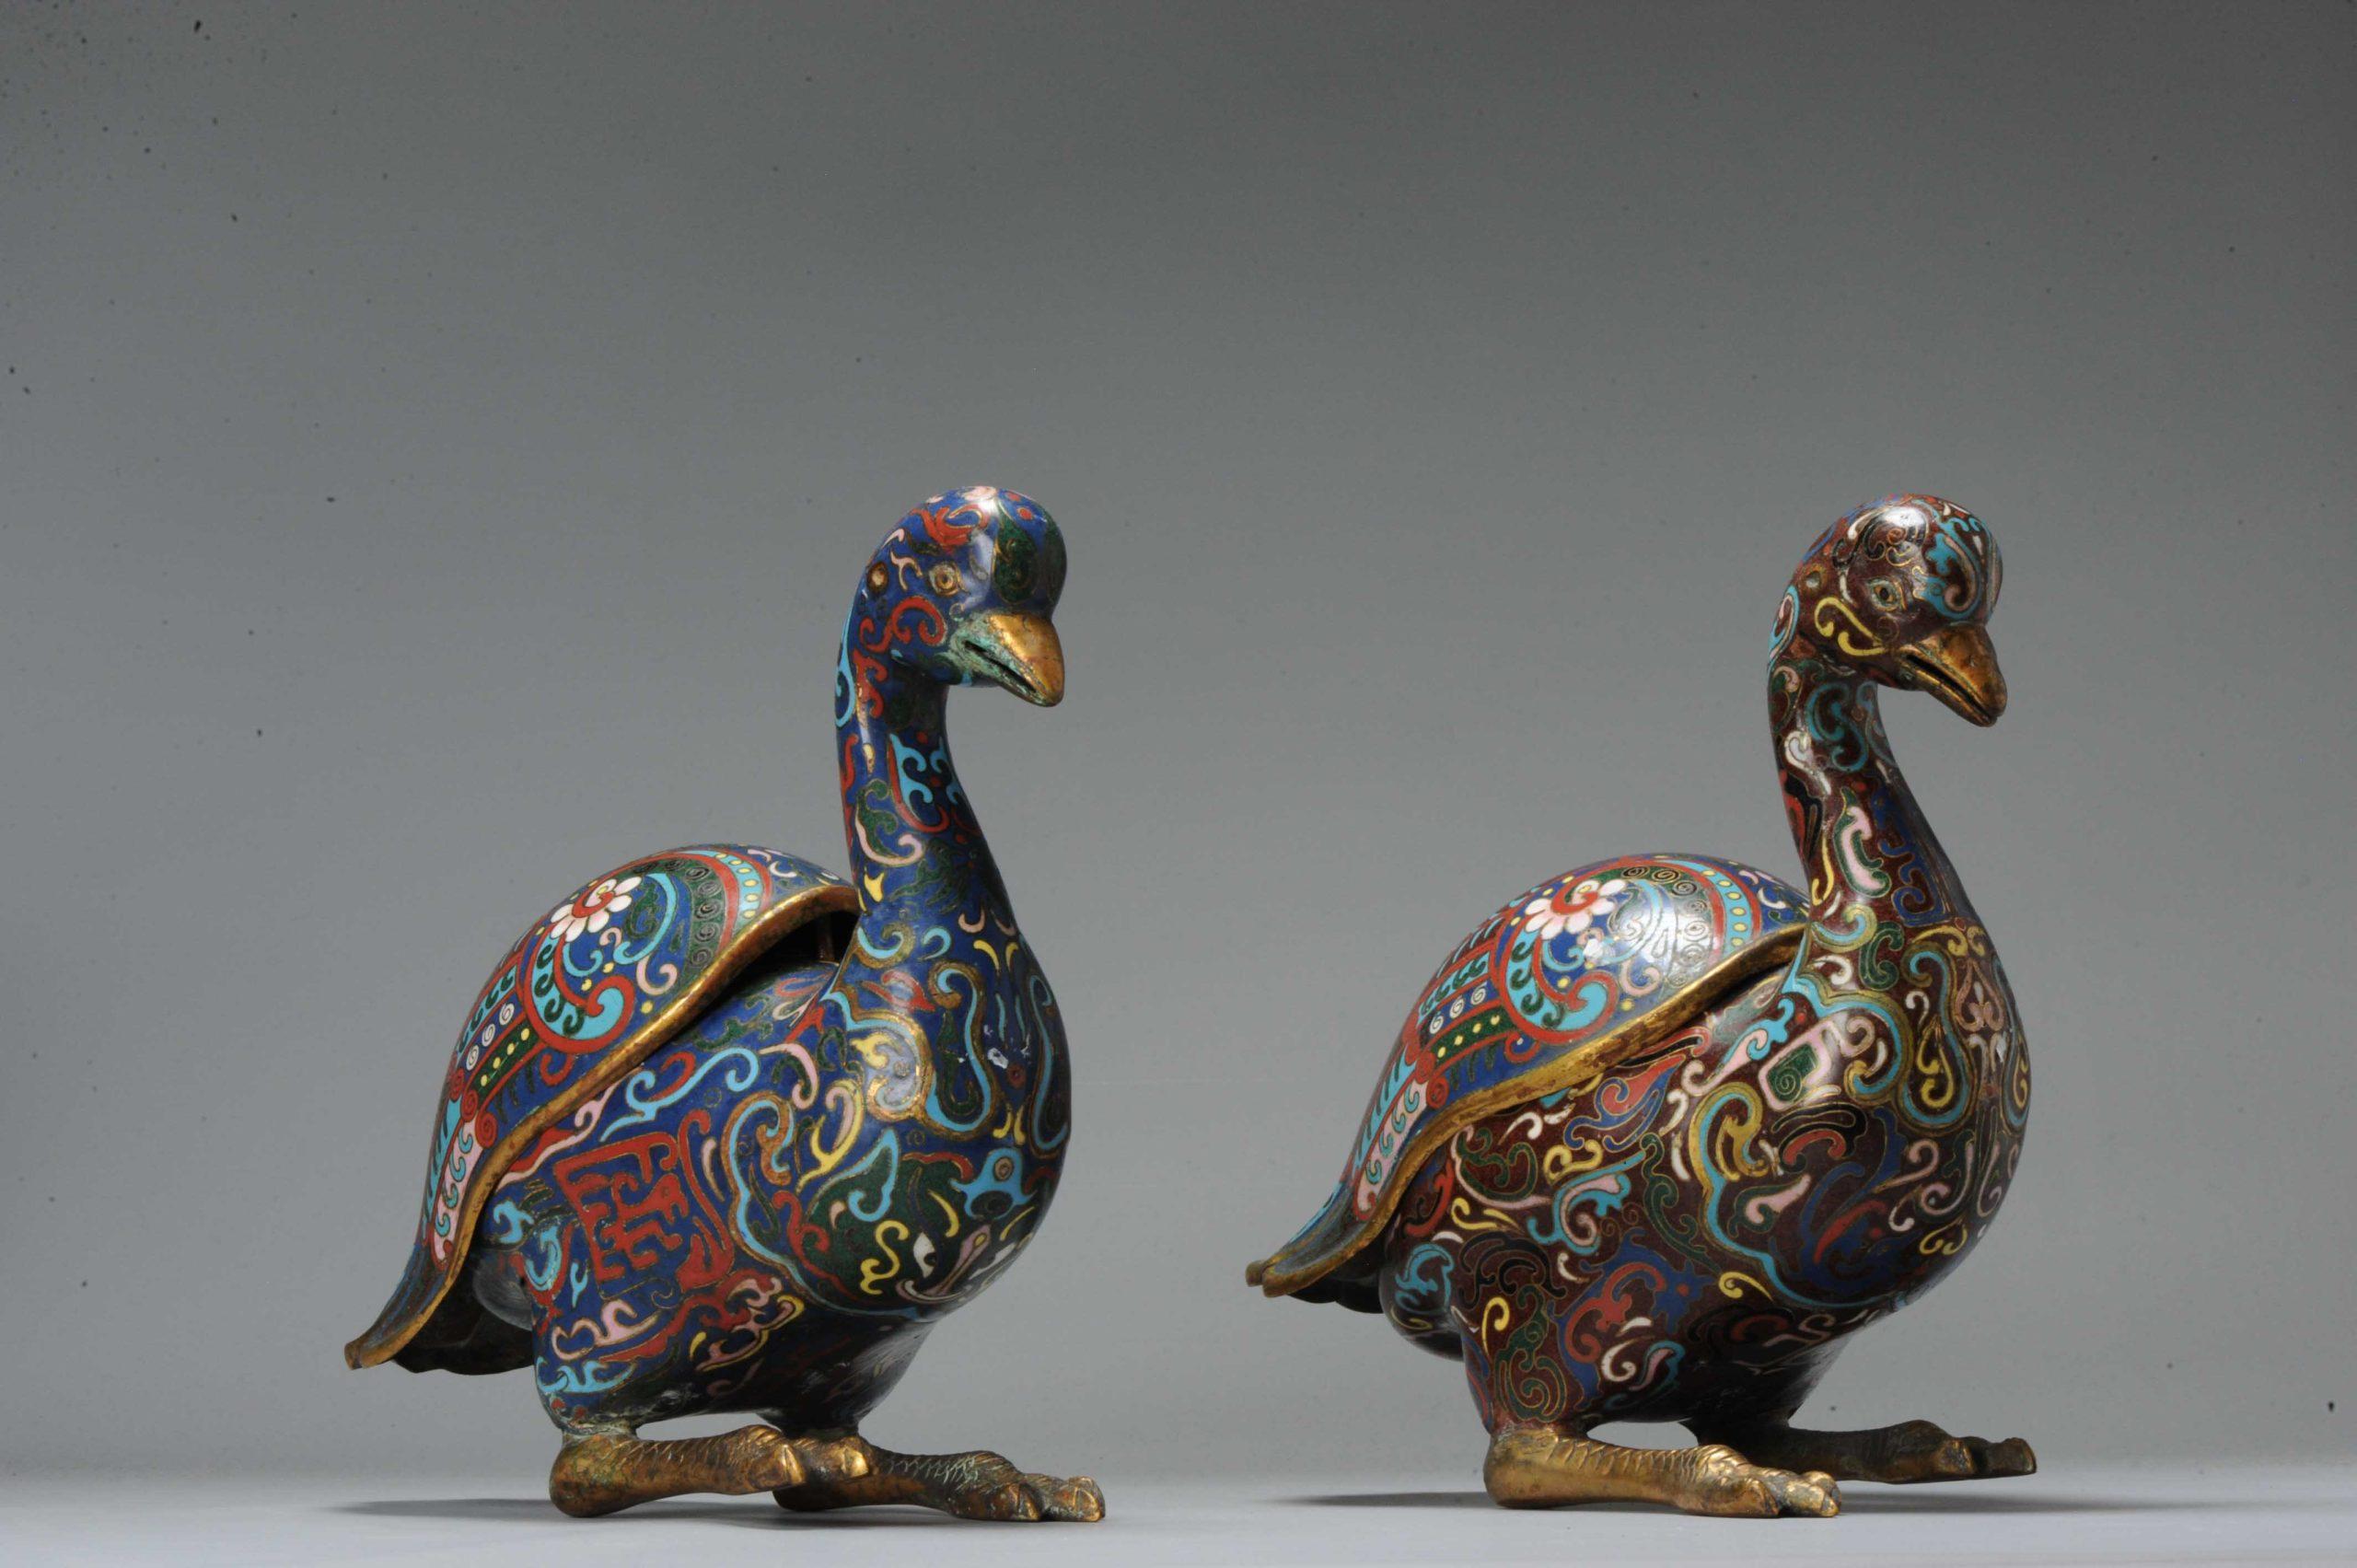 Porcelain Antique Bronze / Copper Cloisonné Burner Inscense Koro Geese or Swan For Sale